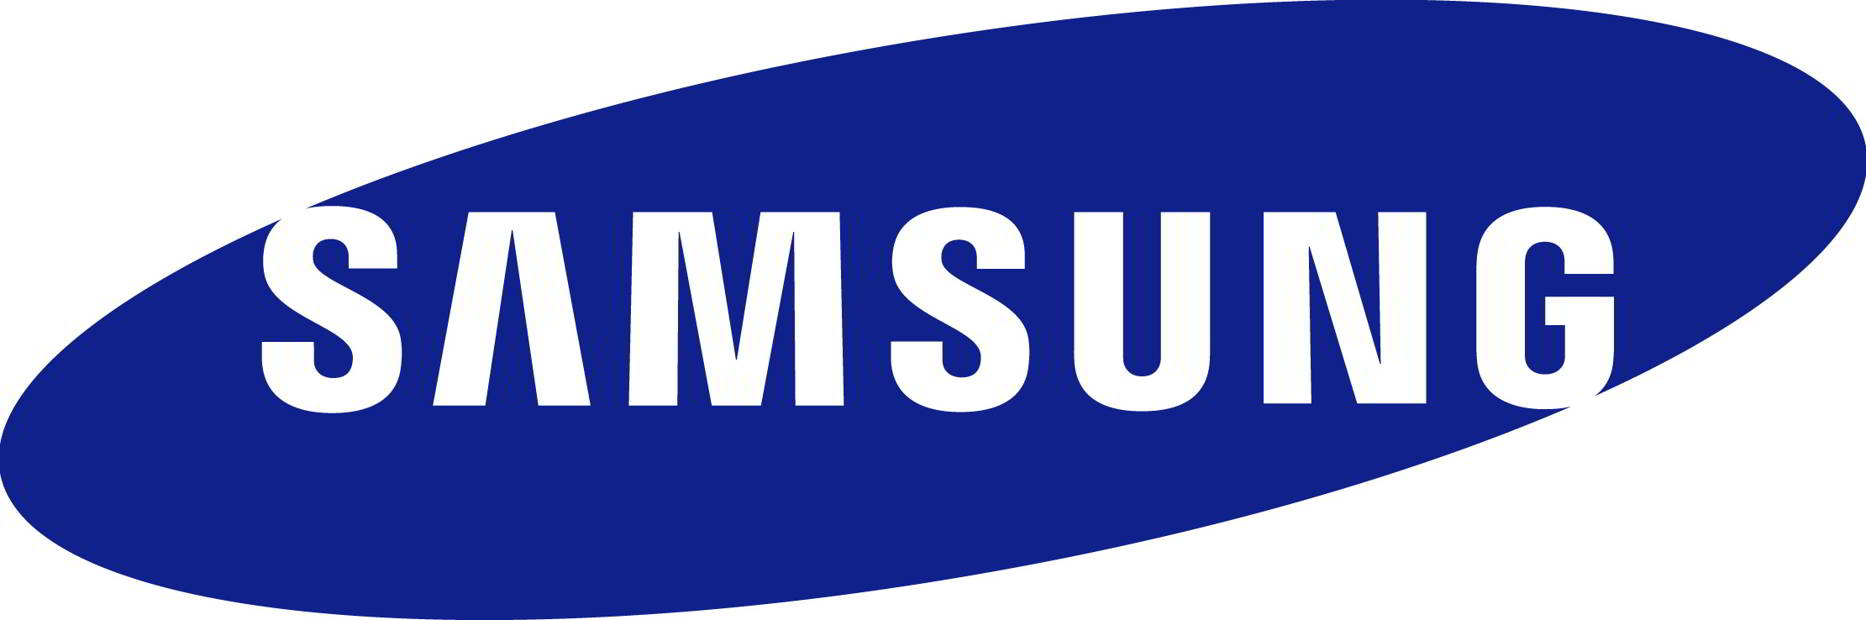 Entrate Samsung Q4 2015